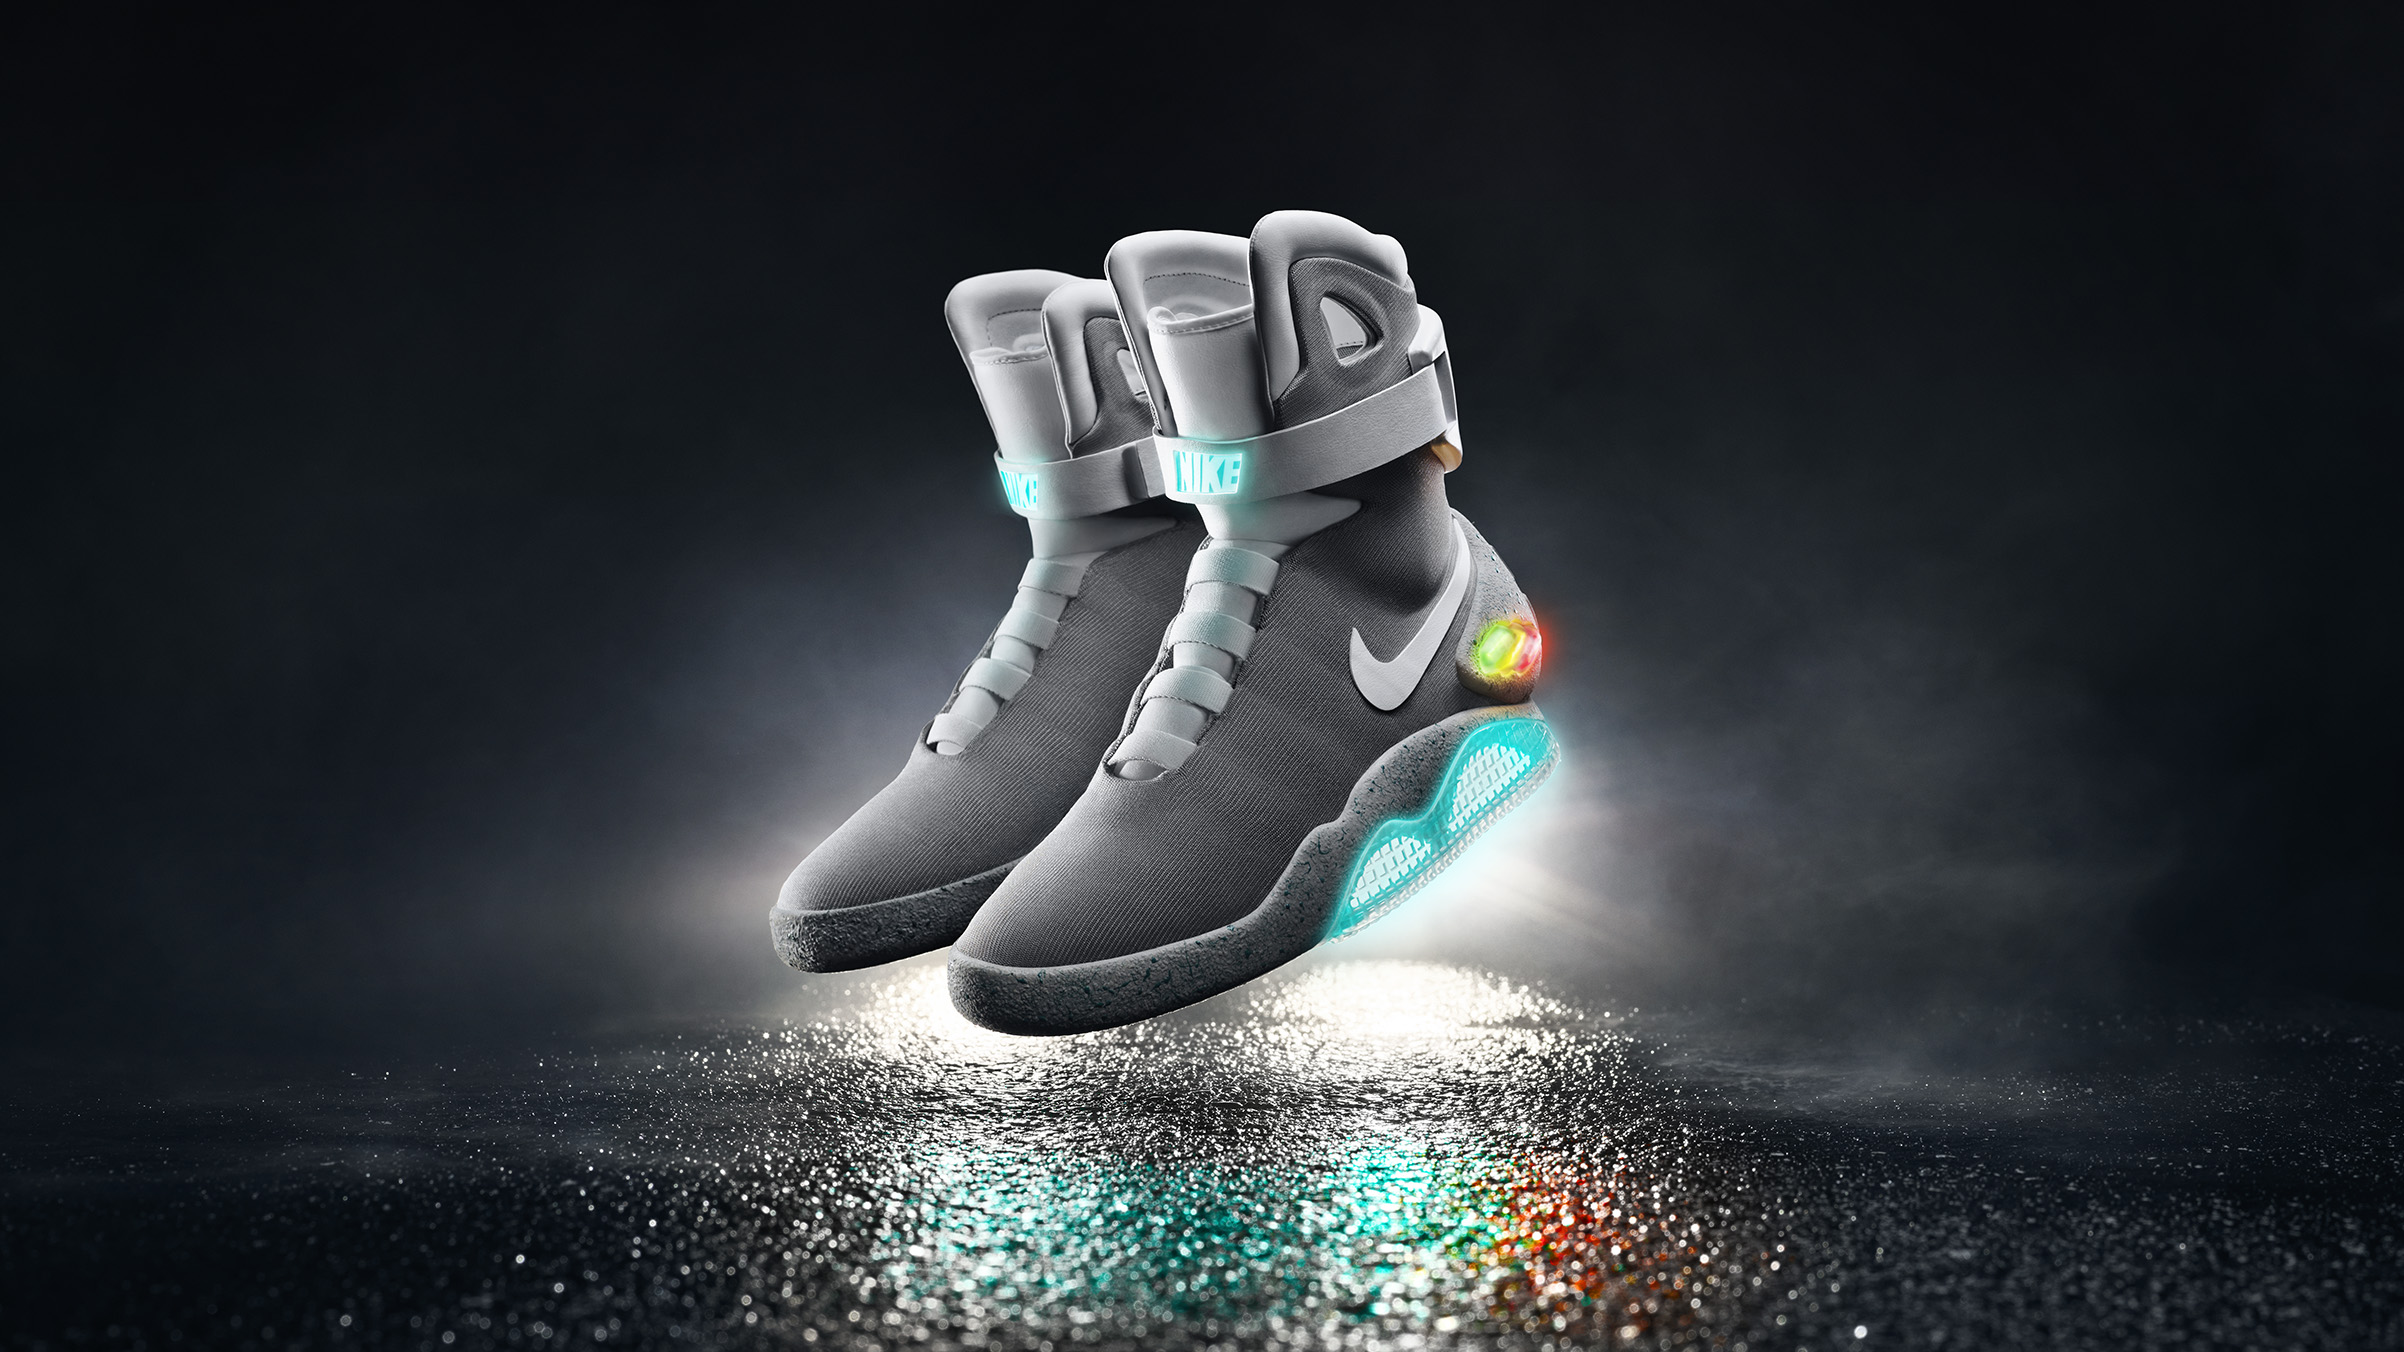 Nike nästa bolag att börja sälja direkt via Amazon